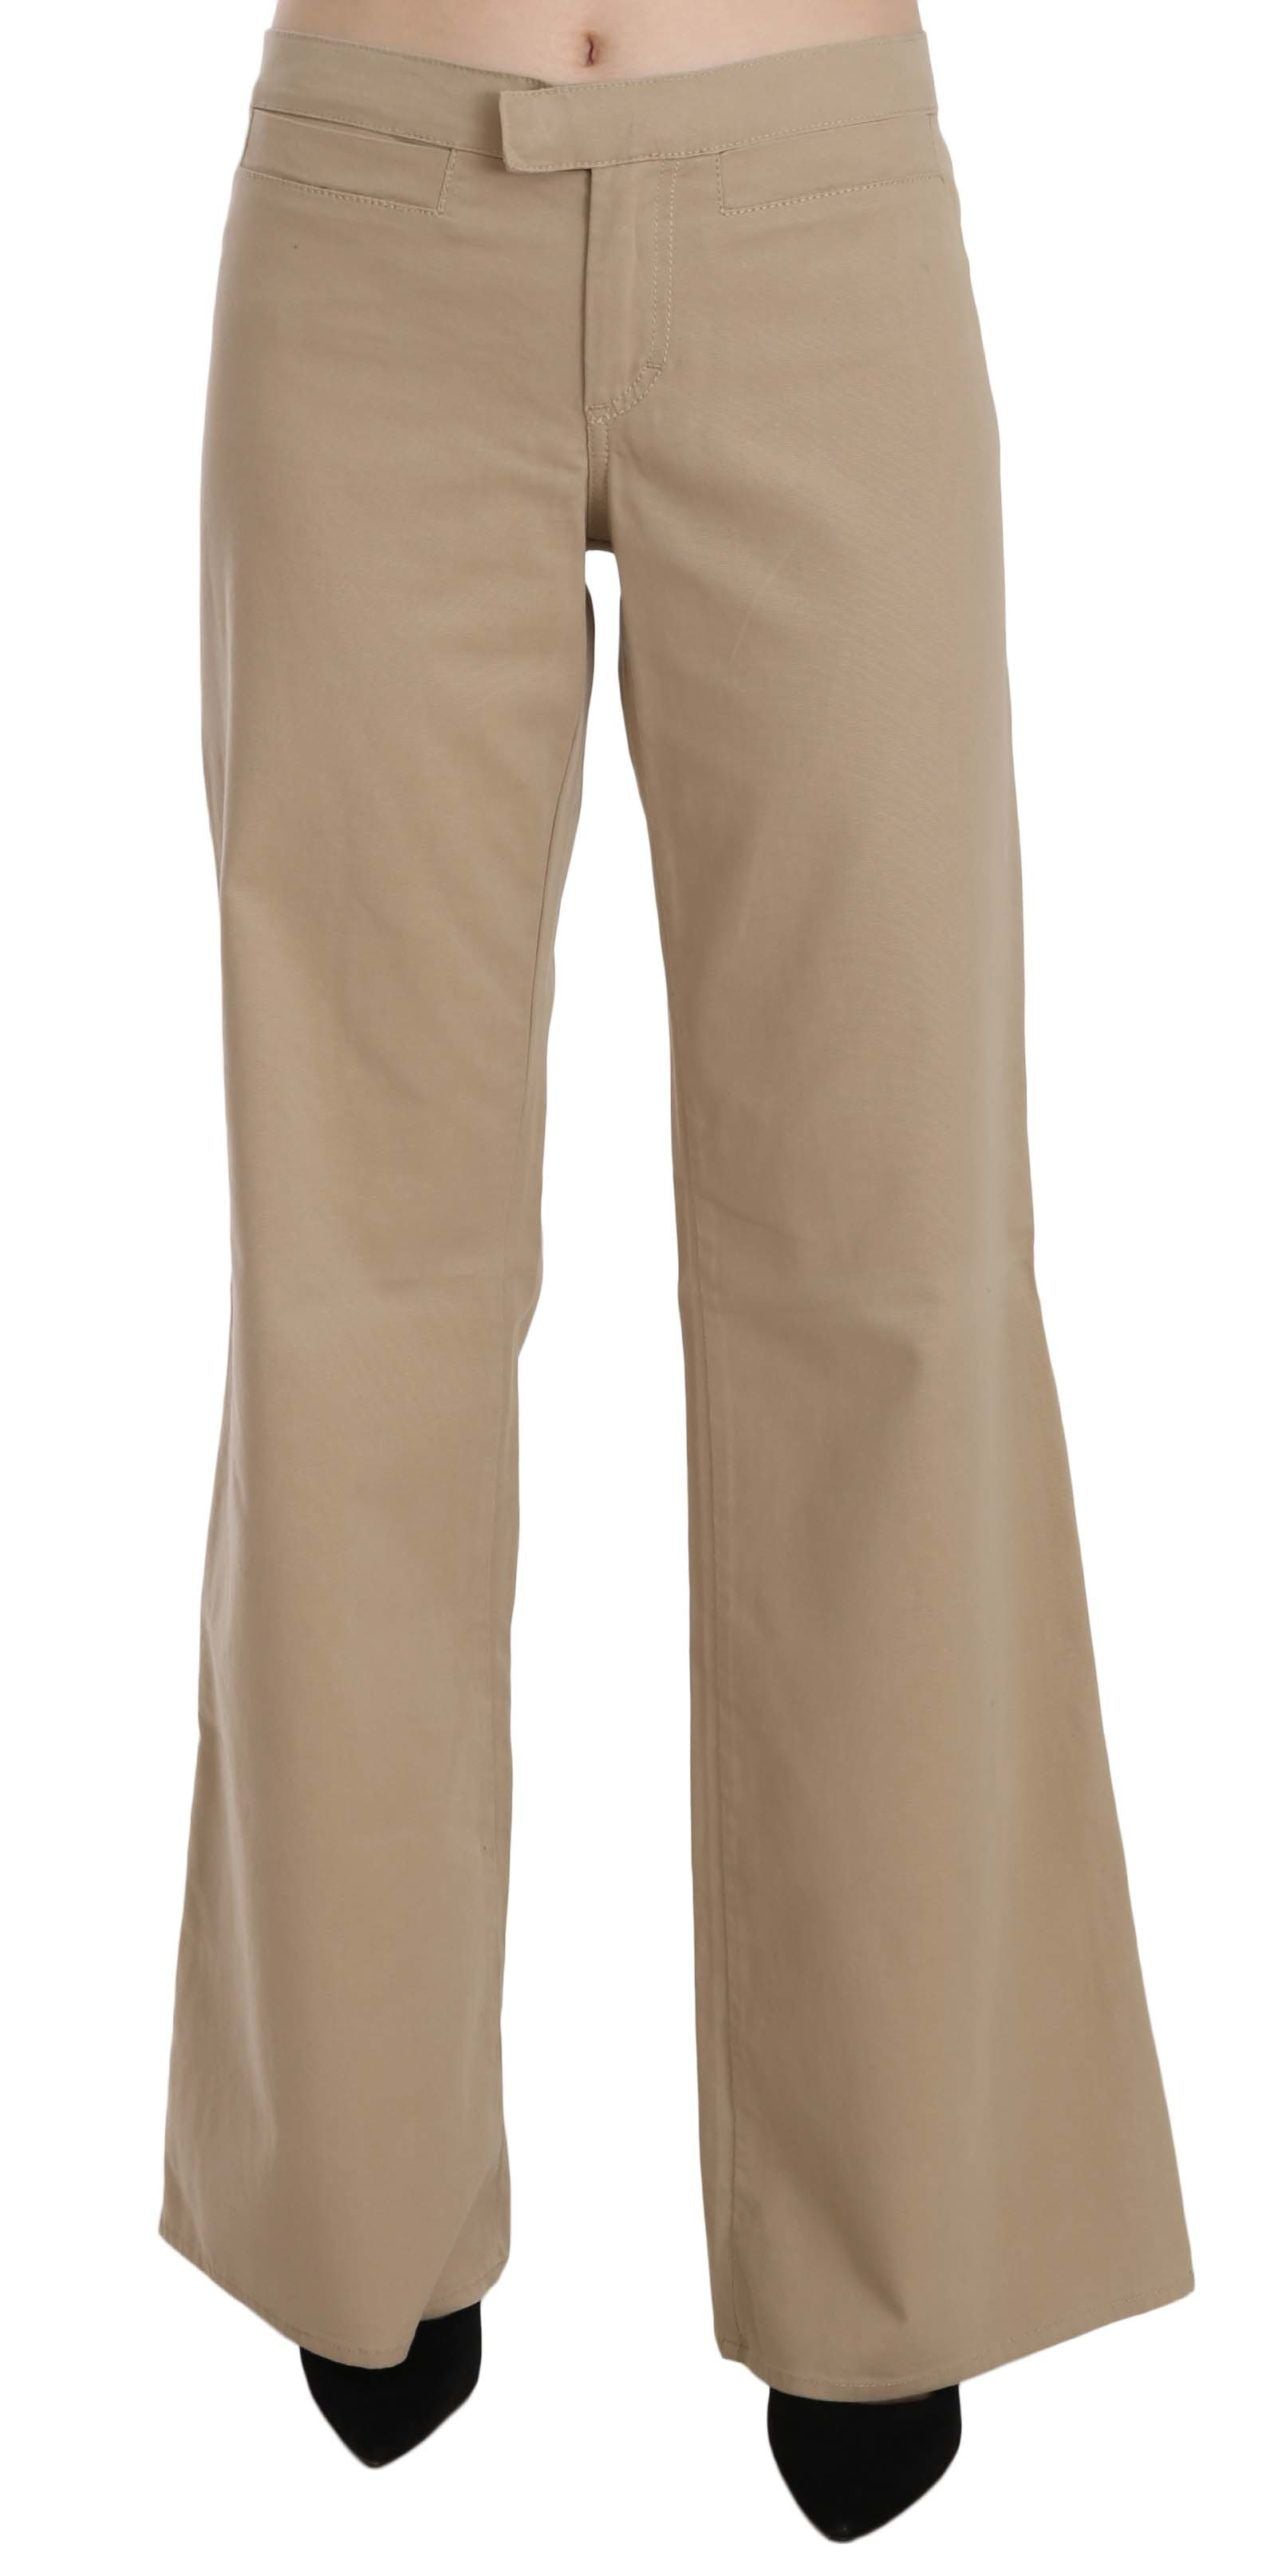 Just Cavalli Beige Cotton Mid Waist Flared Trousers Pants